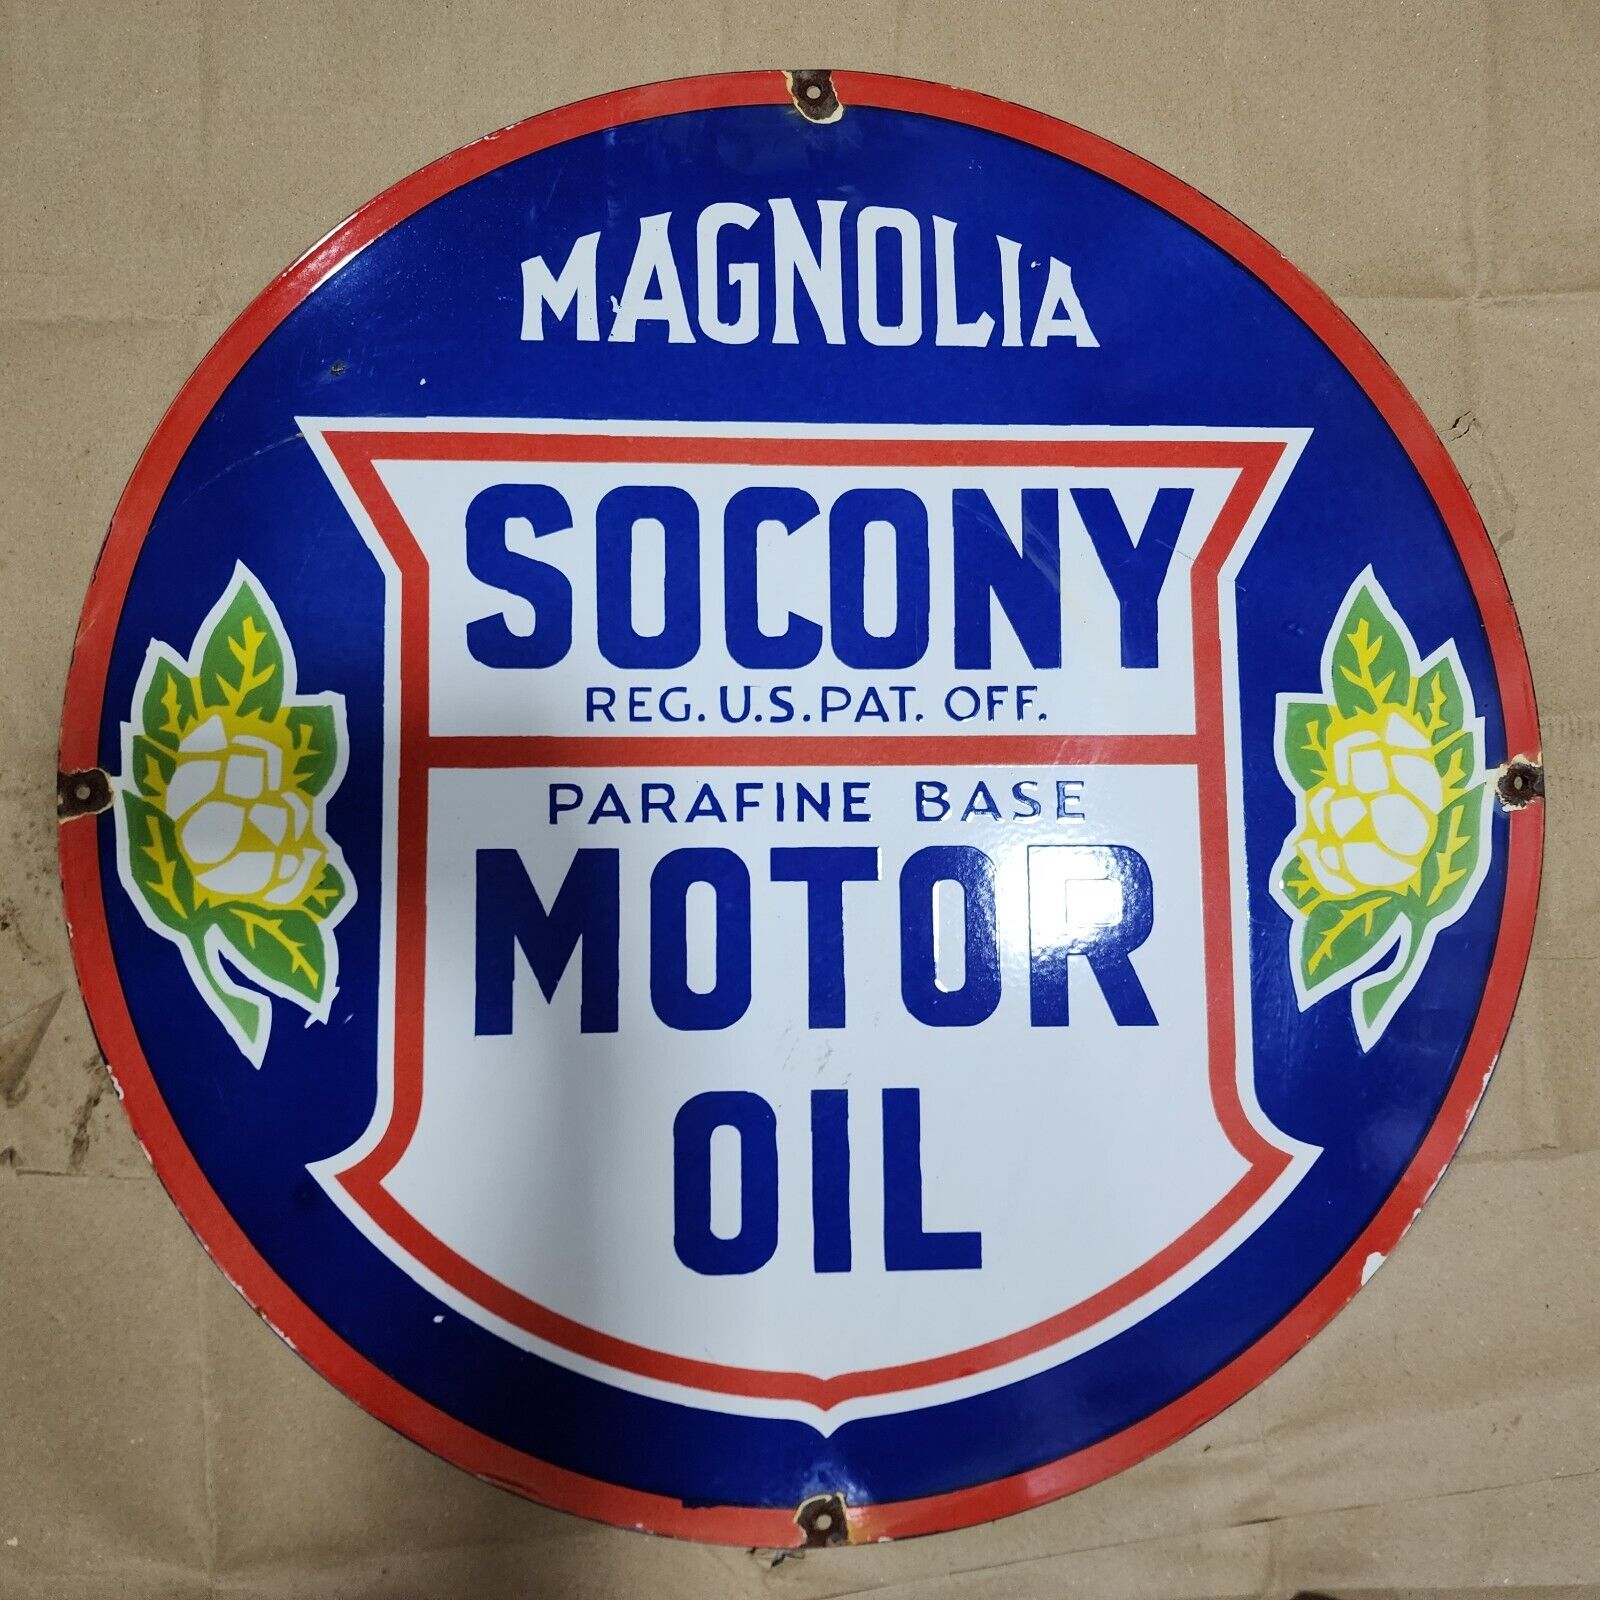 MAGNOLIA SOCONY MOTOR OIL PORCELAIN ENAMEL SIGN 30 INCHES ROUND